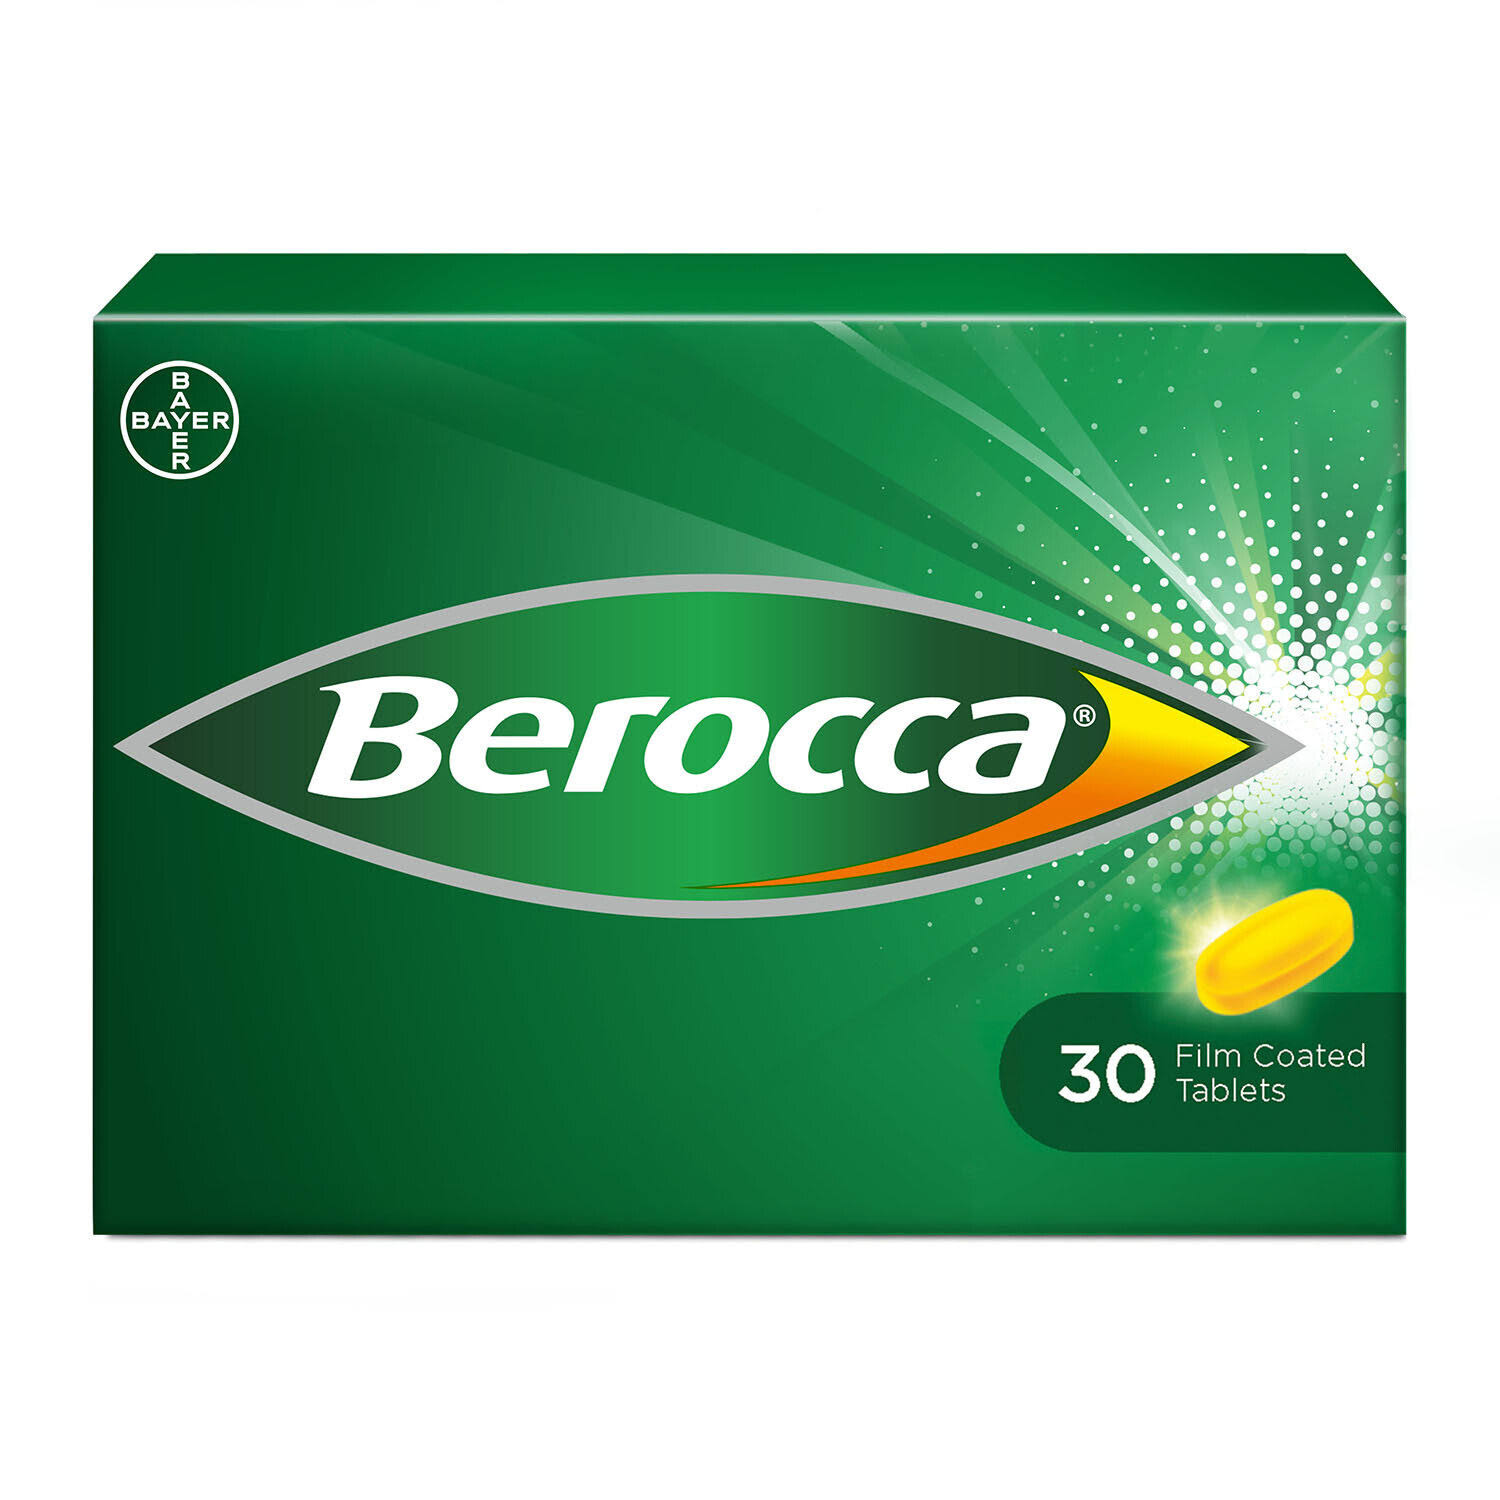 Berocca Energy - 30 Film Coated Tablets